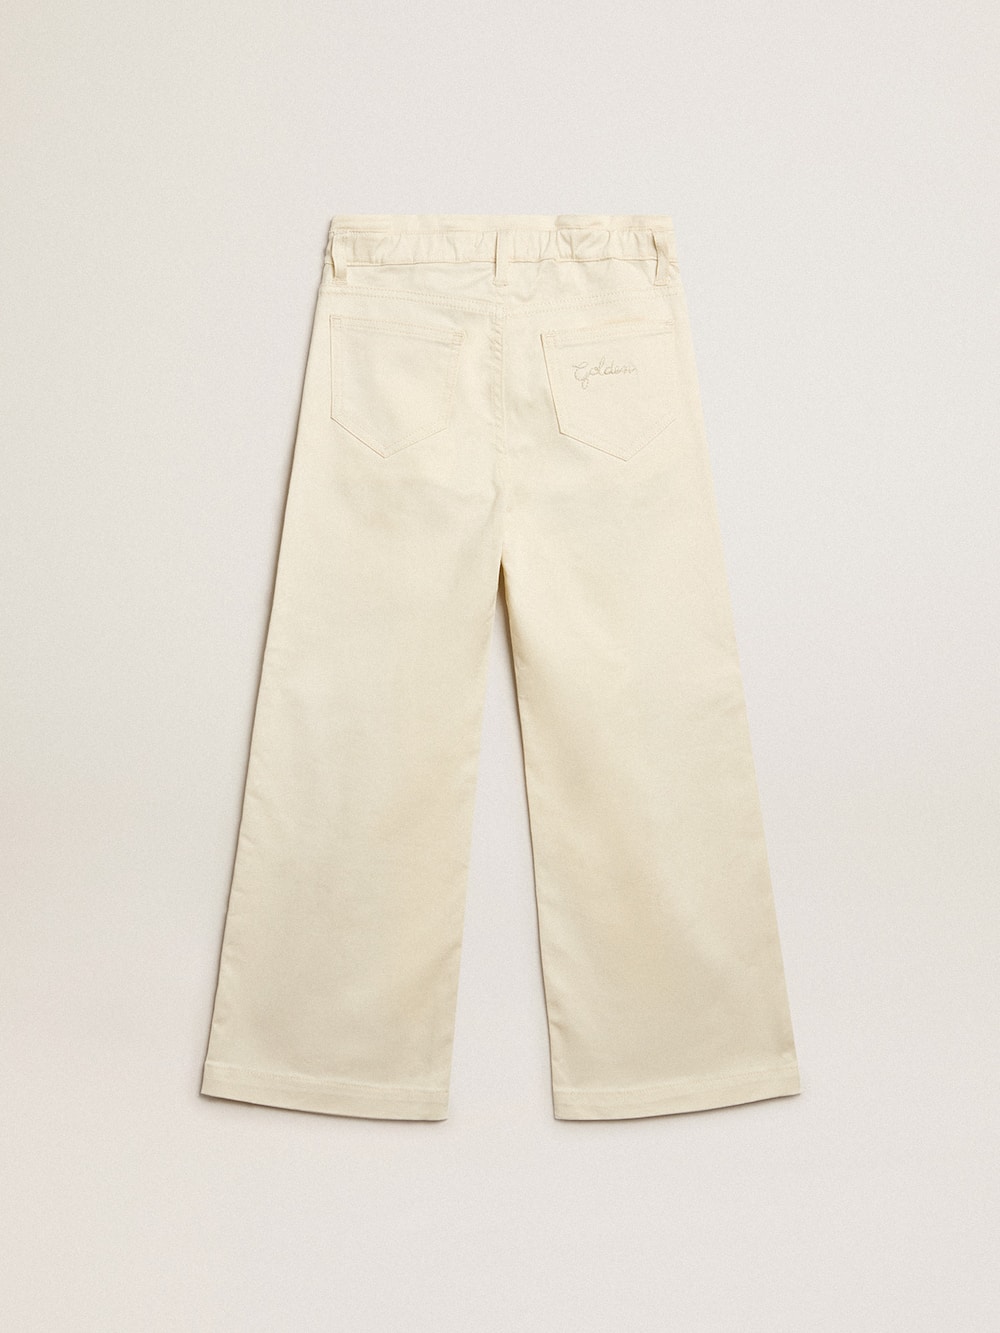 Golden Goose - Pantalón de niña en algodón de color blanco envejecido  in 